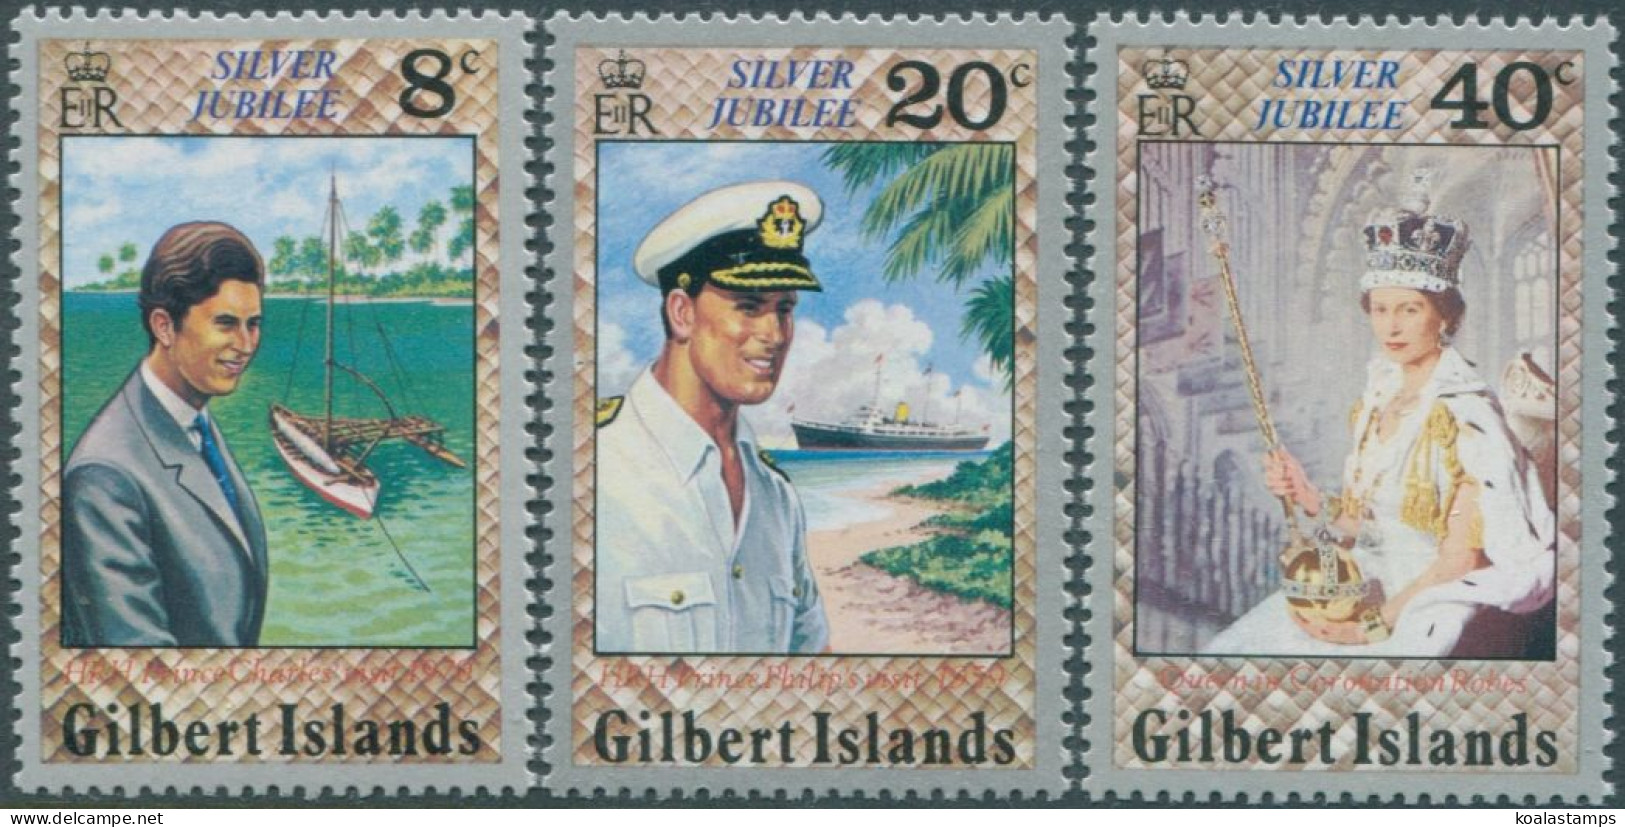 Gilbert Islands 1977 SG48-50 Silver Jubilee Set MNH - Kiribati (1979-...)